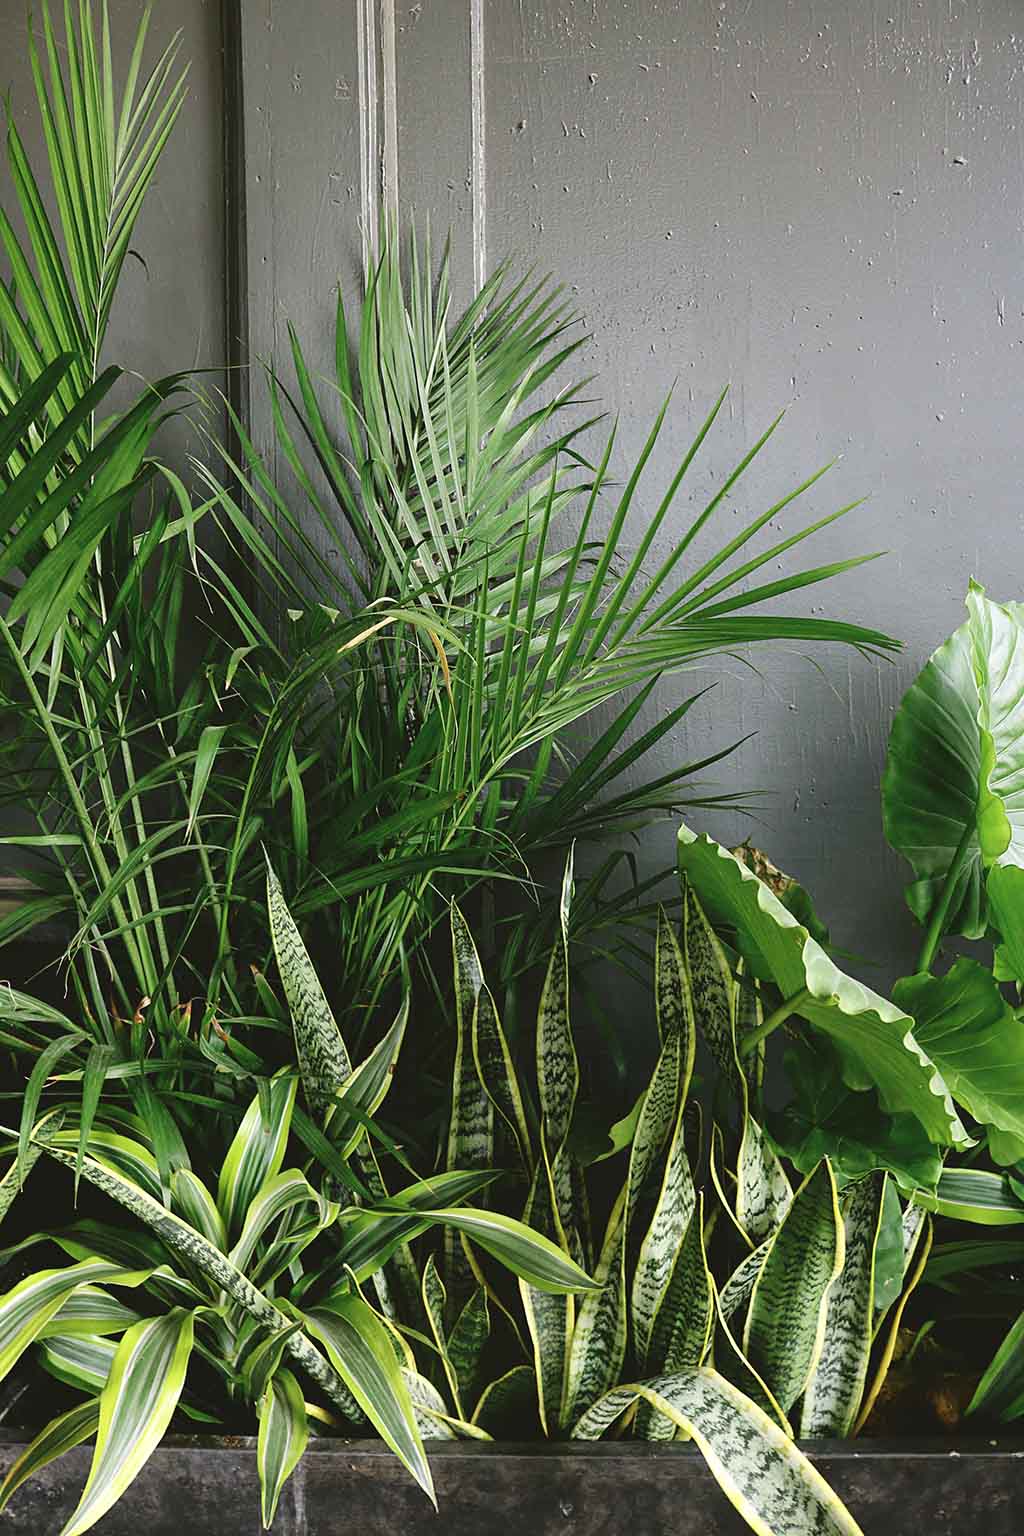 palm tree - palm fertiliser